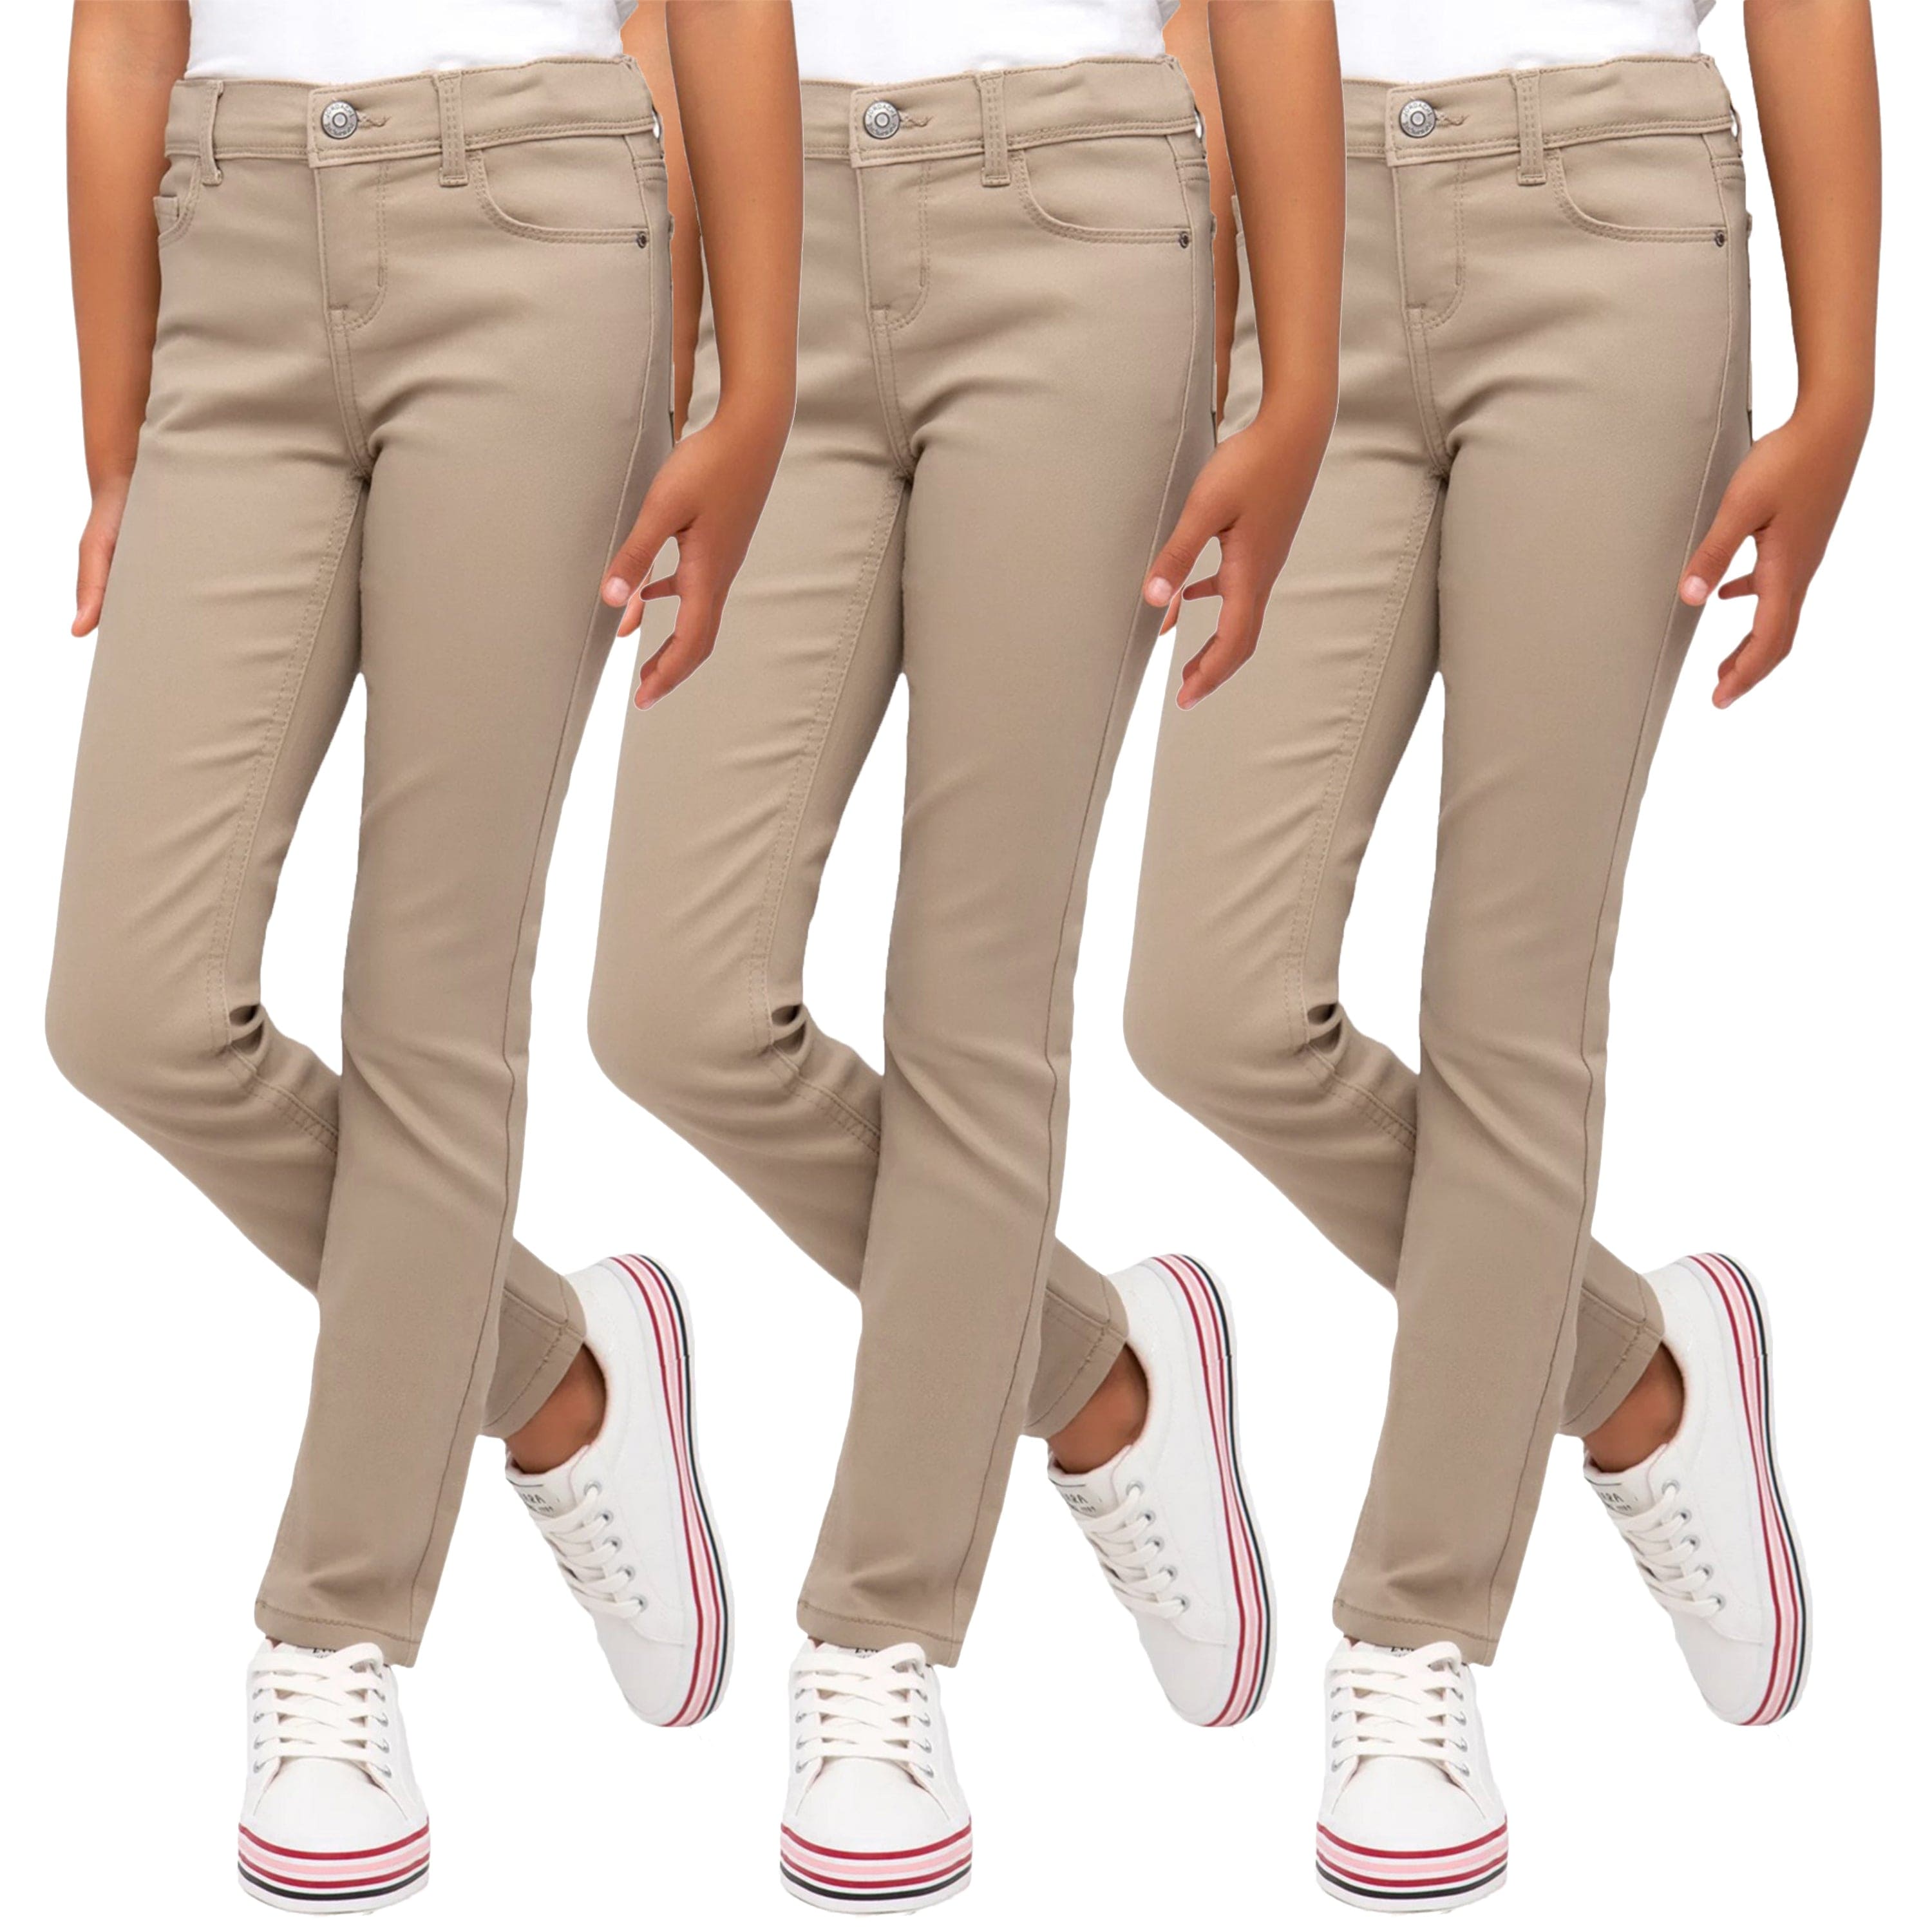 Premium Wear Skinny Stretchable School Uniform Pants for Girls Khaki 16